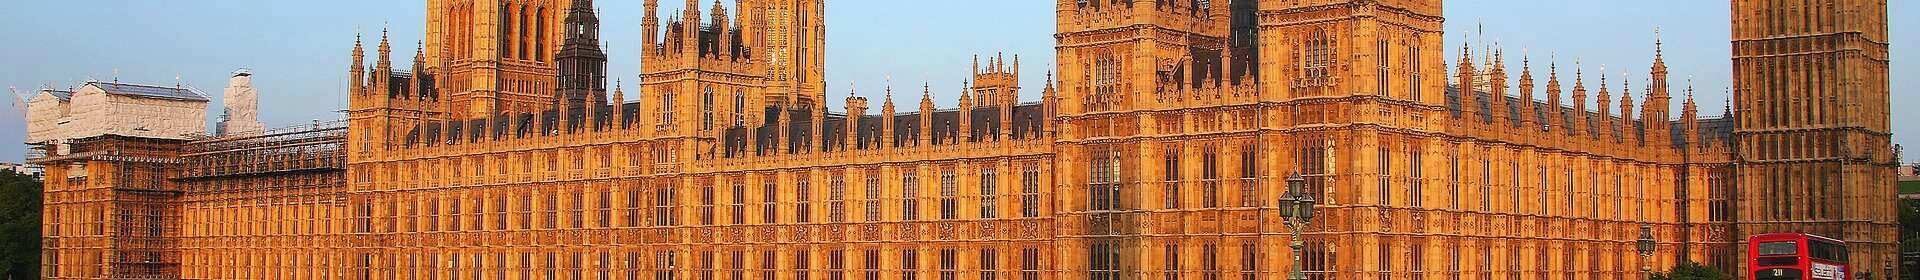 Parliament building in London UK